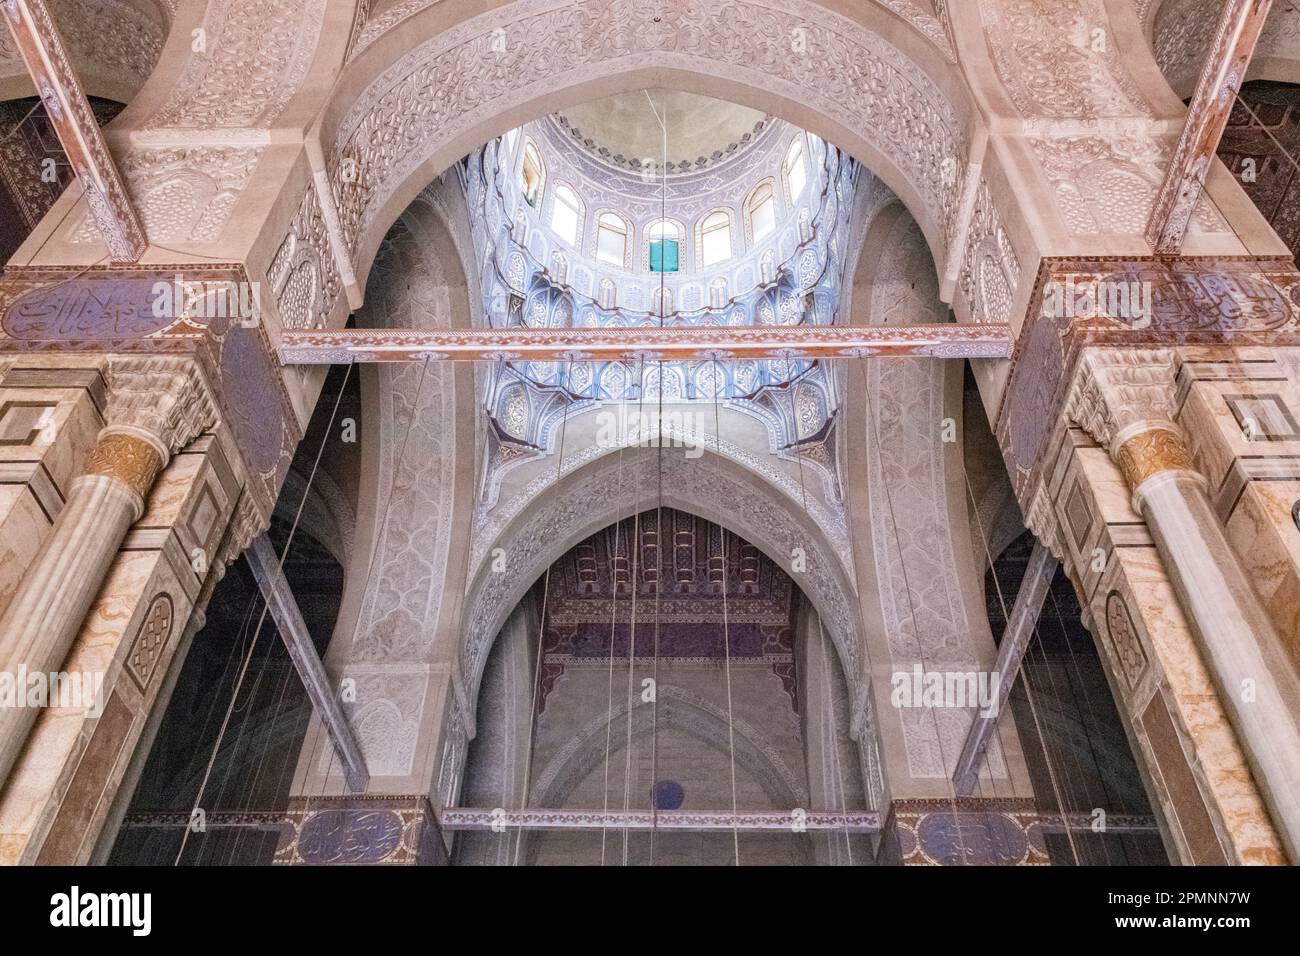 The architecture inside the prayer hall of Al-Rifai Mosque in Cairo, Egypt Stock Photo